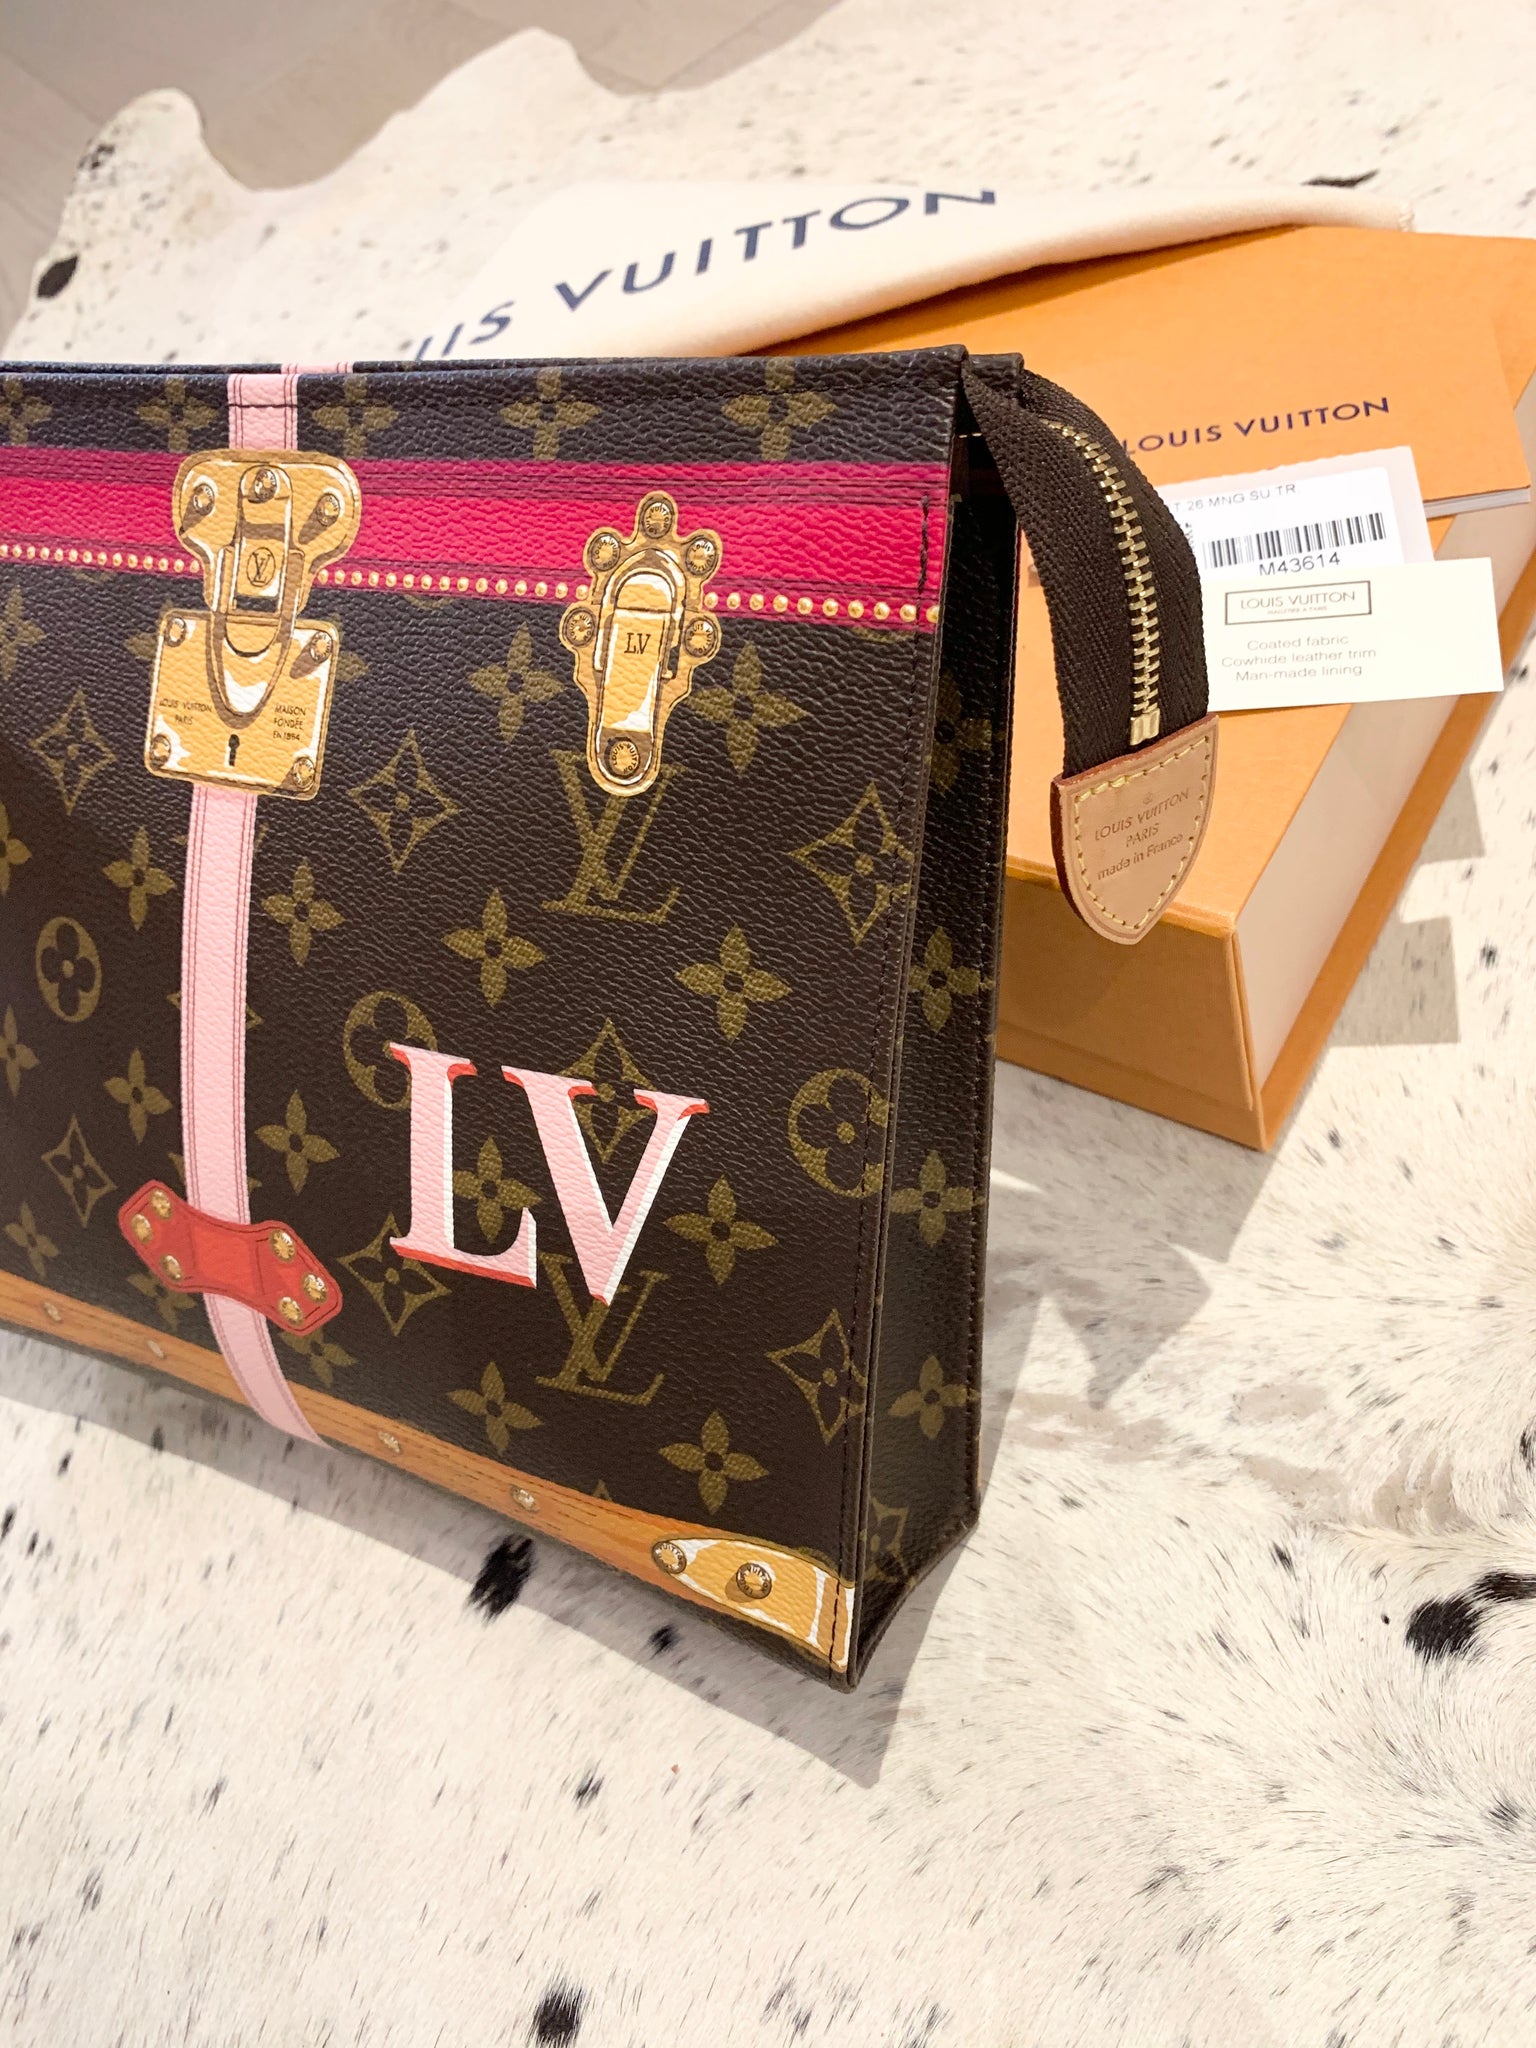 NEW IN BOX Louis Vuitton SUMMER TRUNKS Toiletry 26 Pouch Pouchette